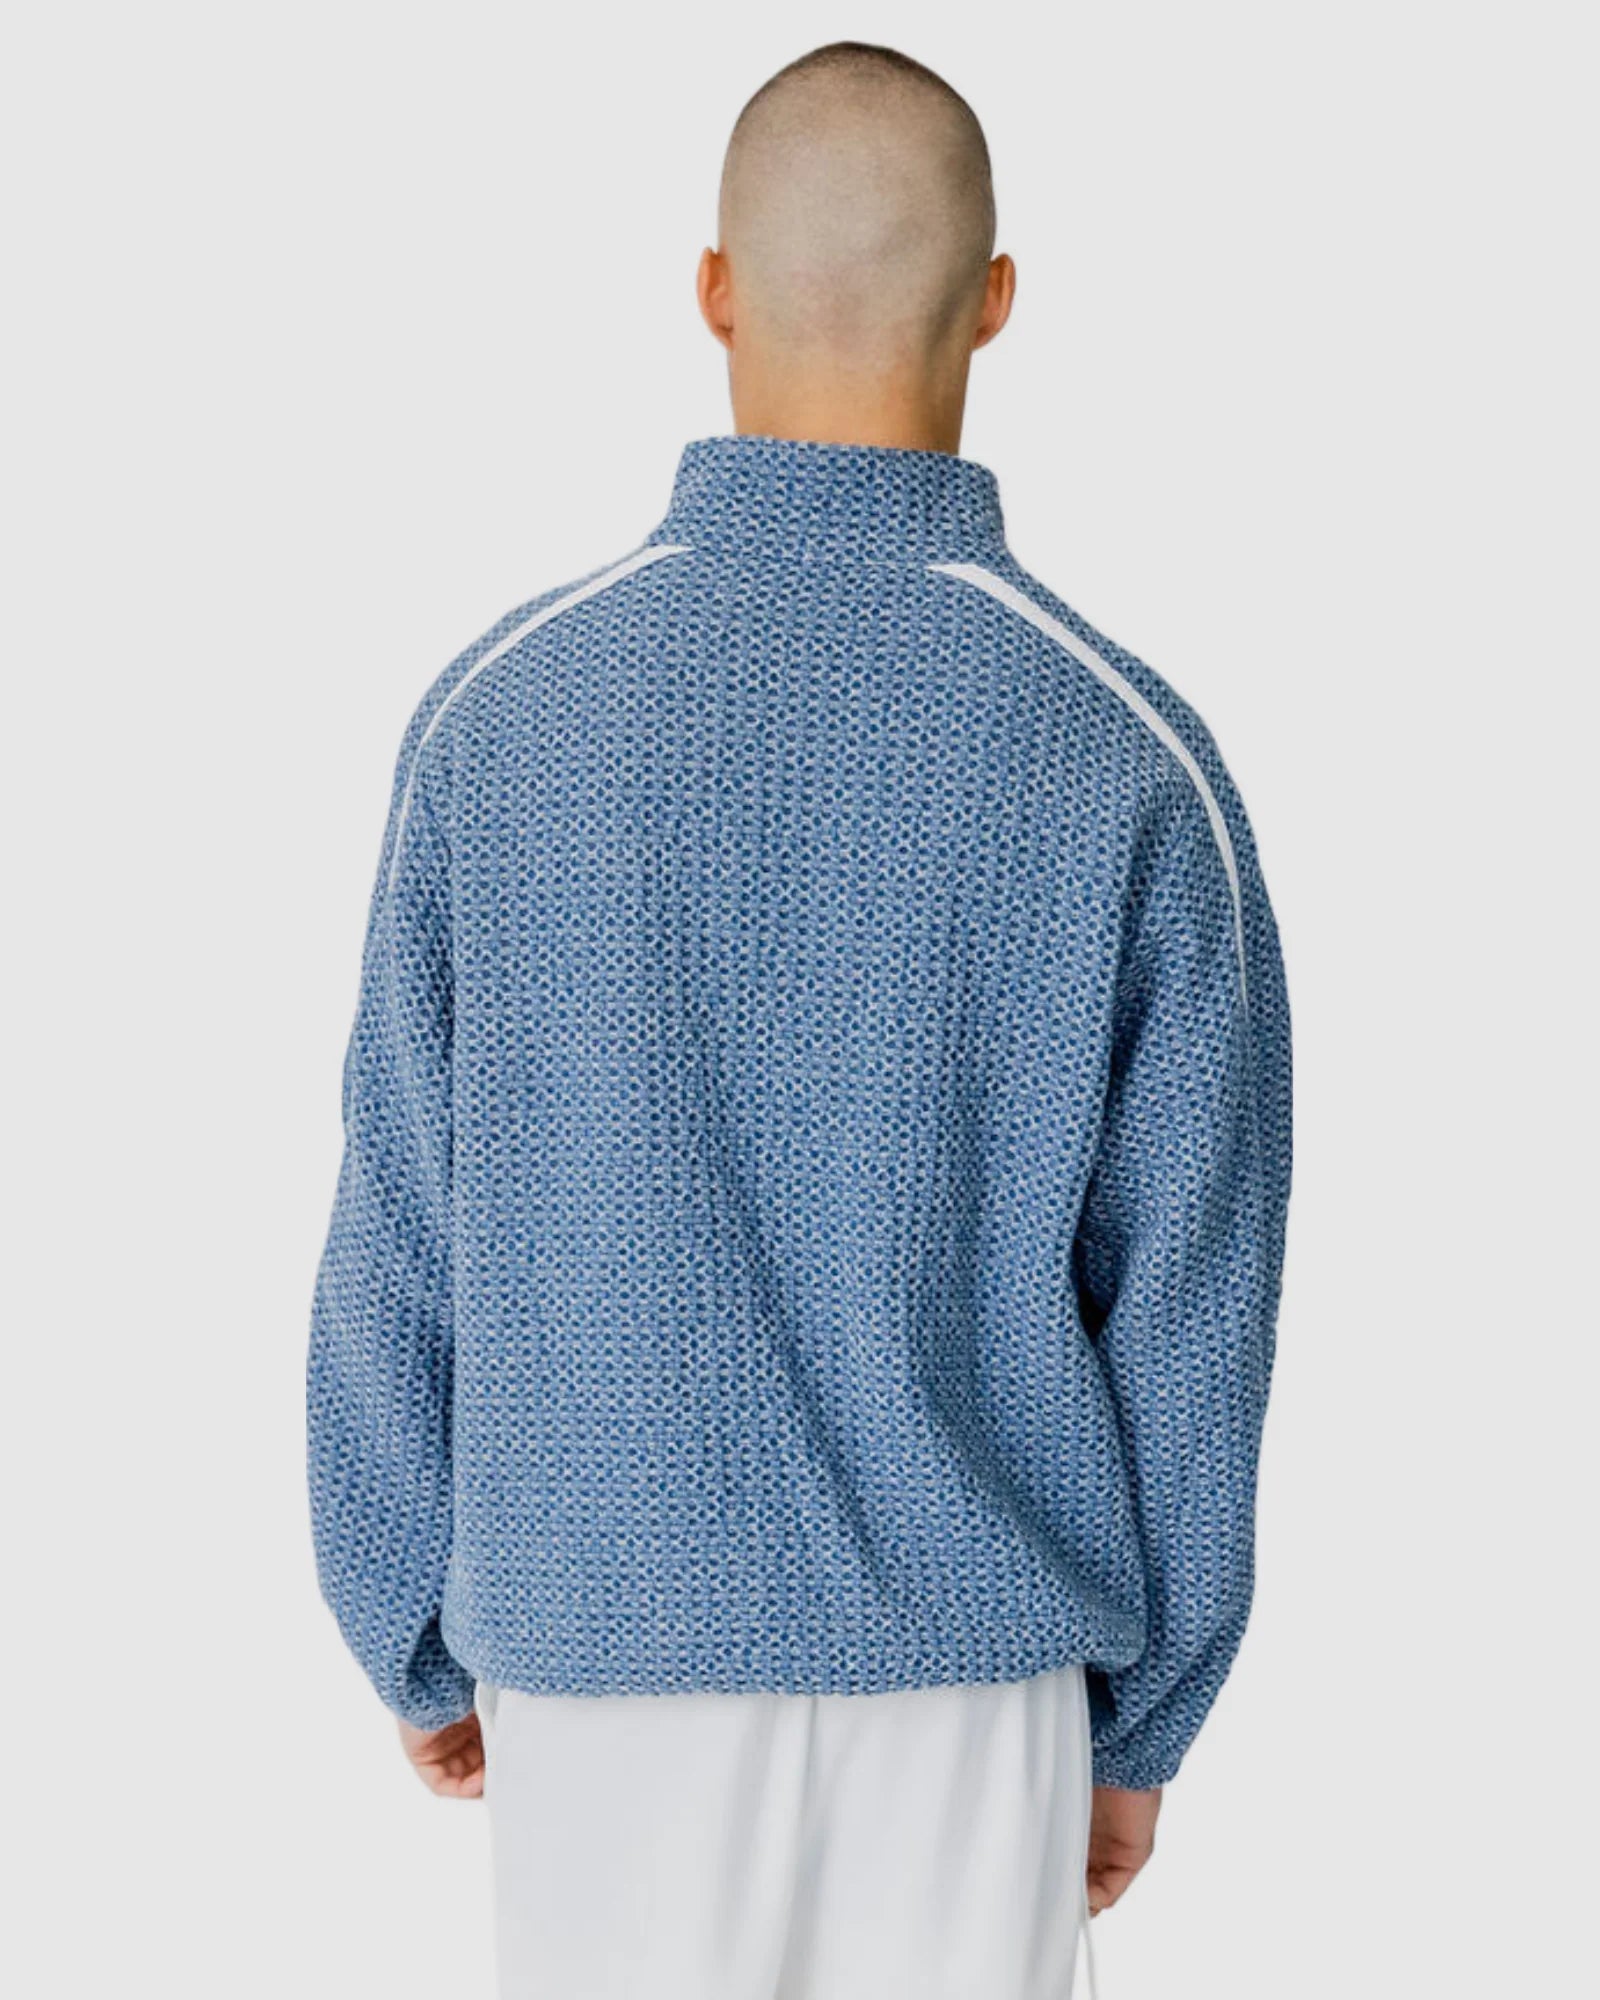 Justin Cassin Daylan High Sweatshirt in Blue Color 4